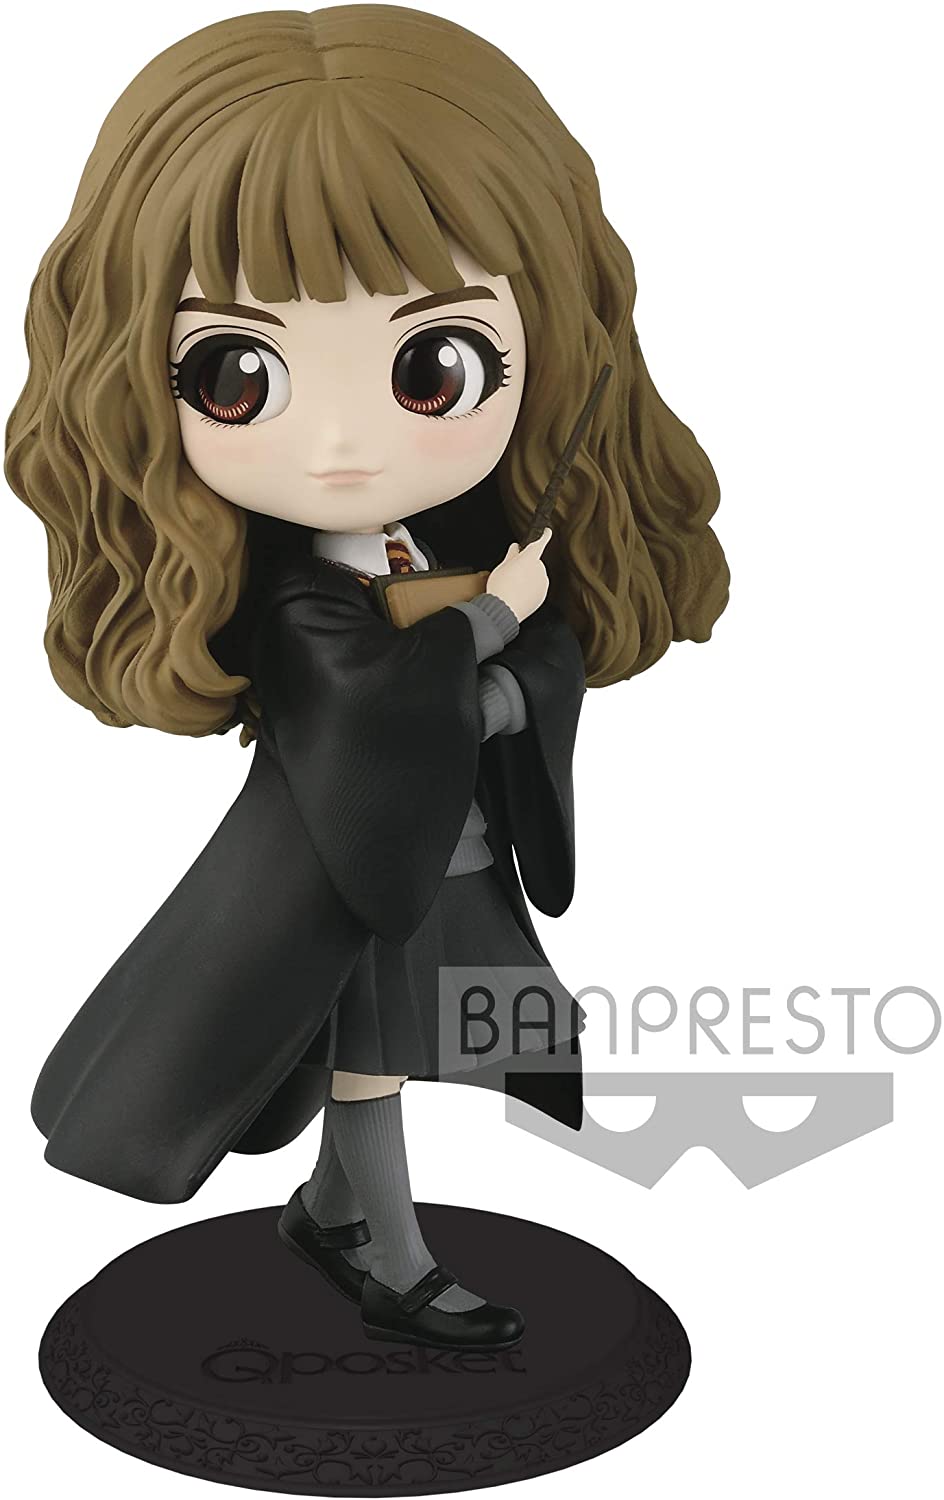 Banpresto HARRY POTTER - Hermione Granger - Figurine Q Posket 14cm